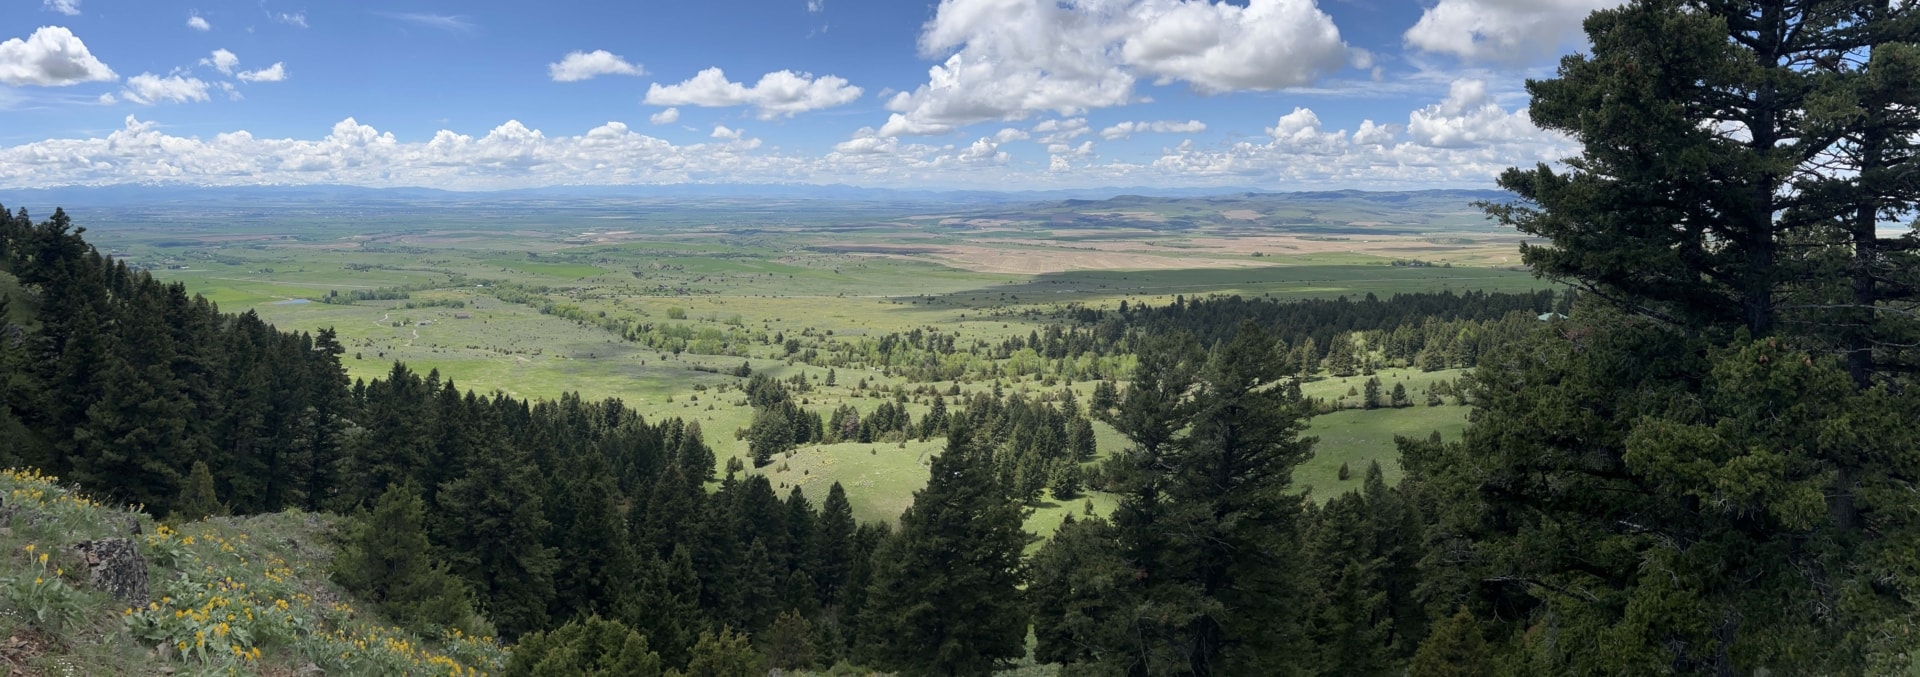 montana land for sale montana gallatin valley overlook